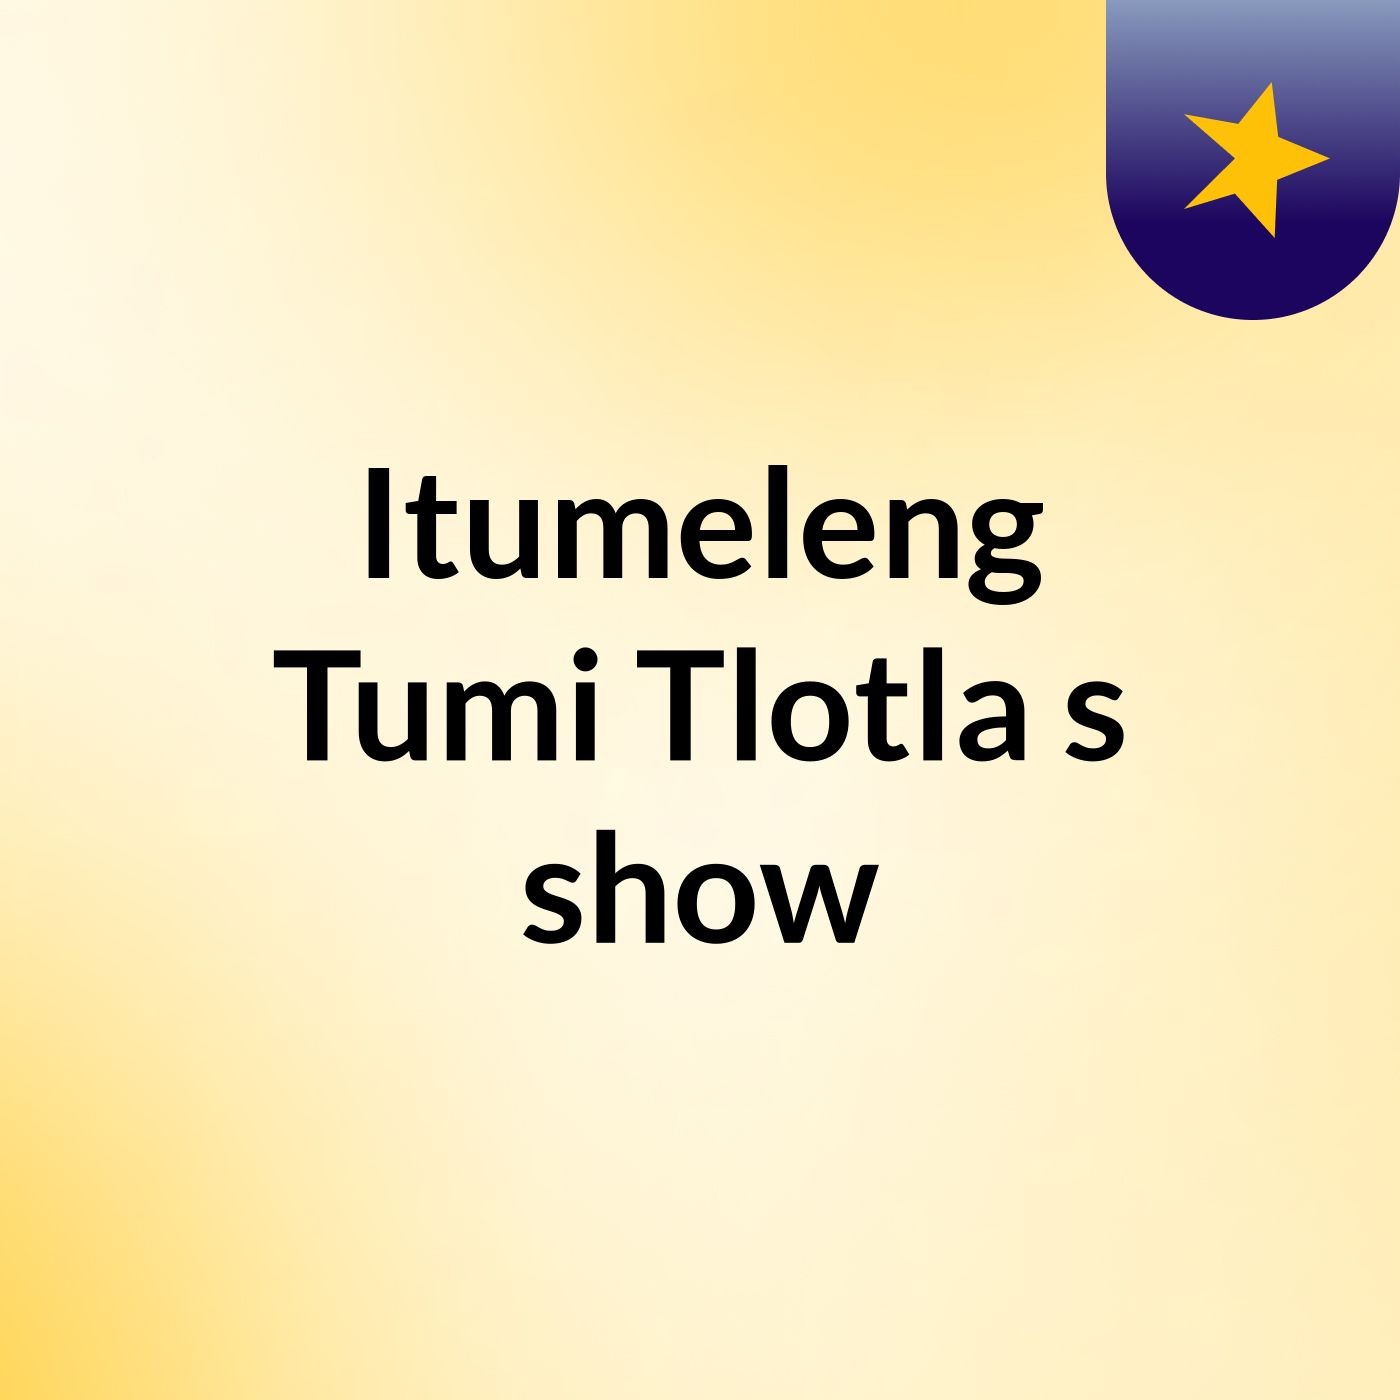 Itumeleng's show